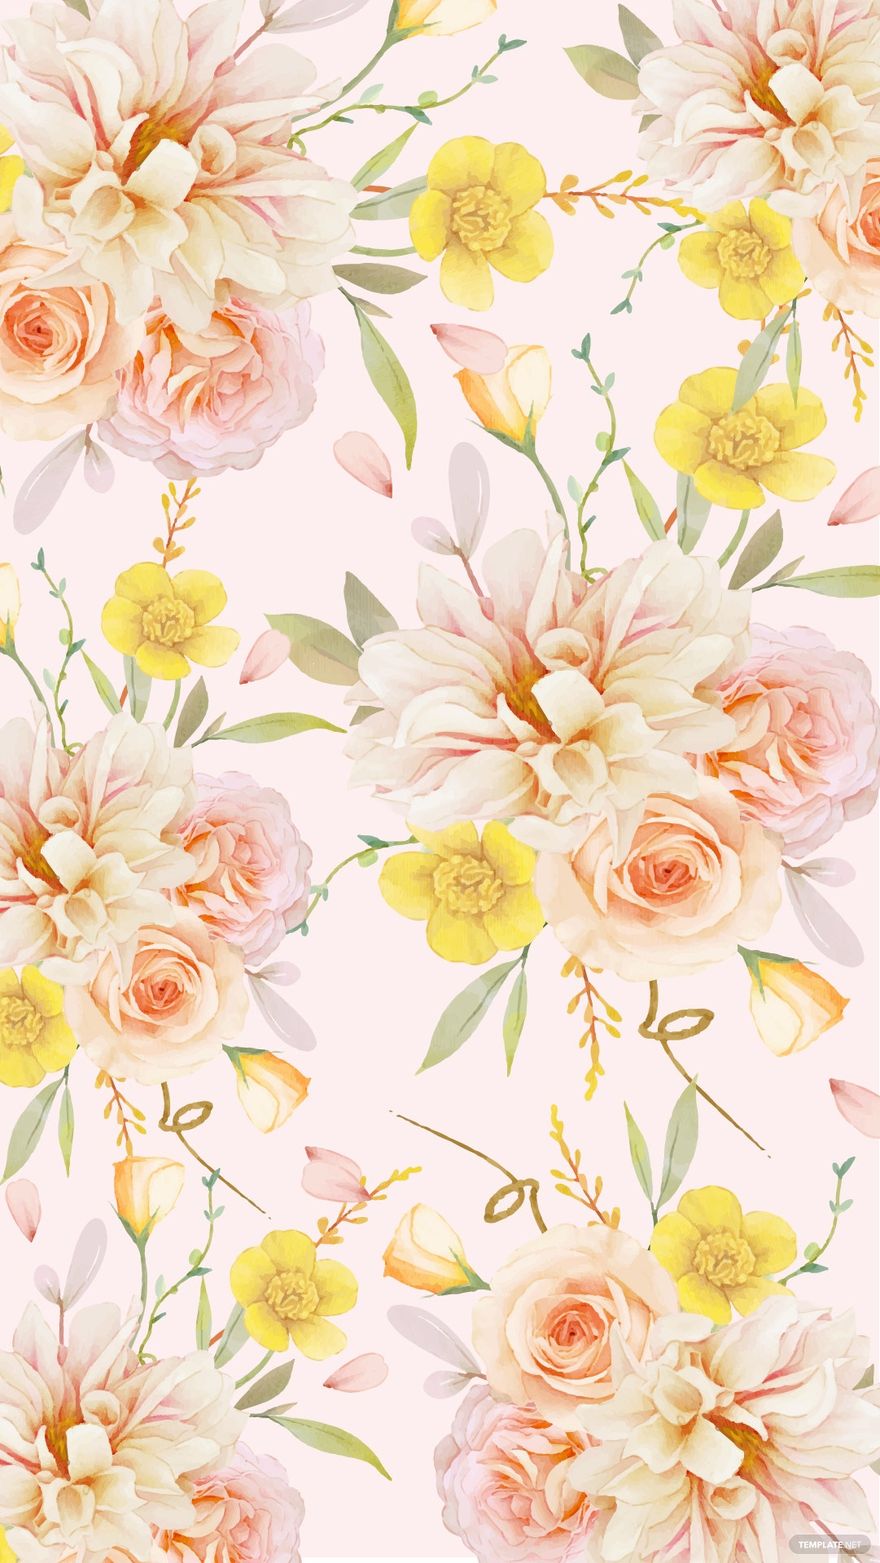 Free Bouquet Flower Watercolor Background in Illustrator, EPS, SVG, JPG